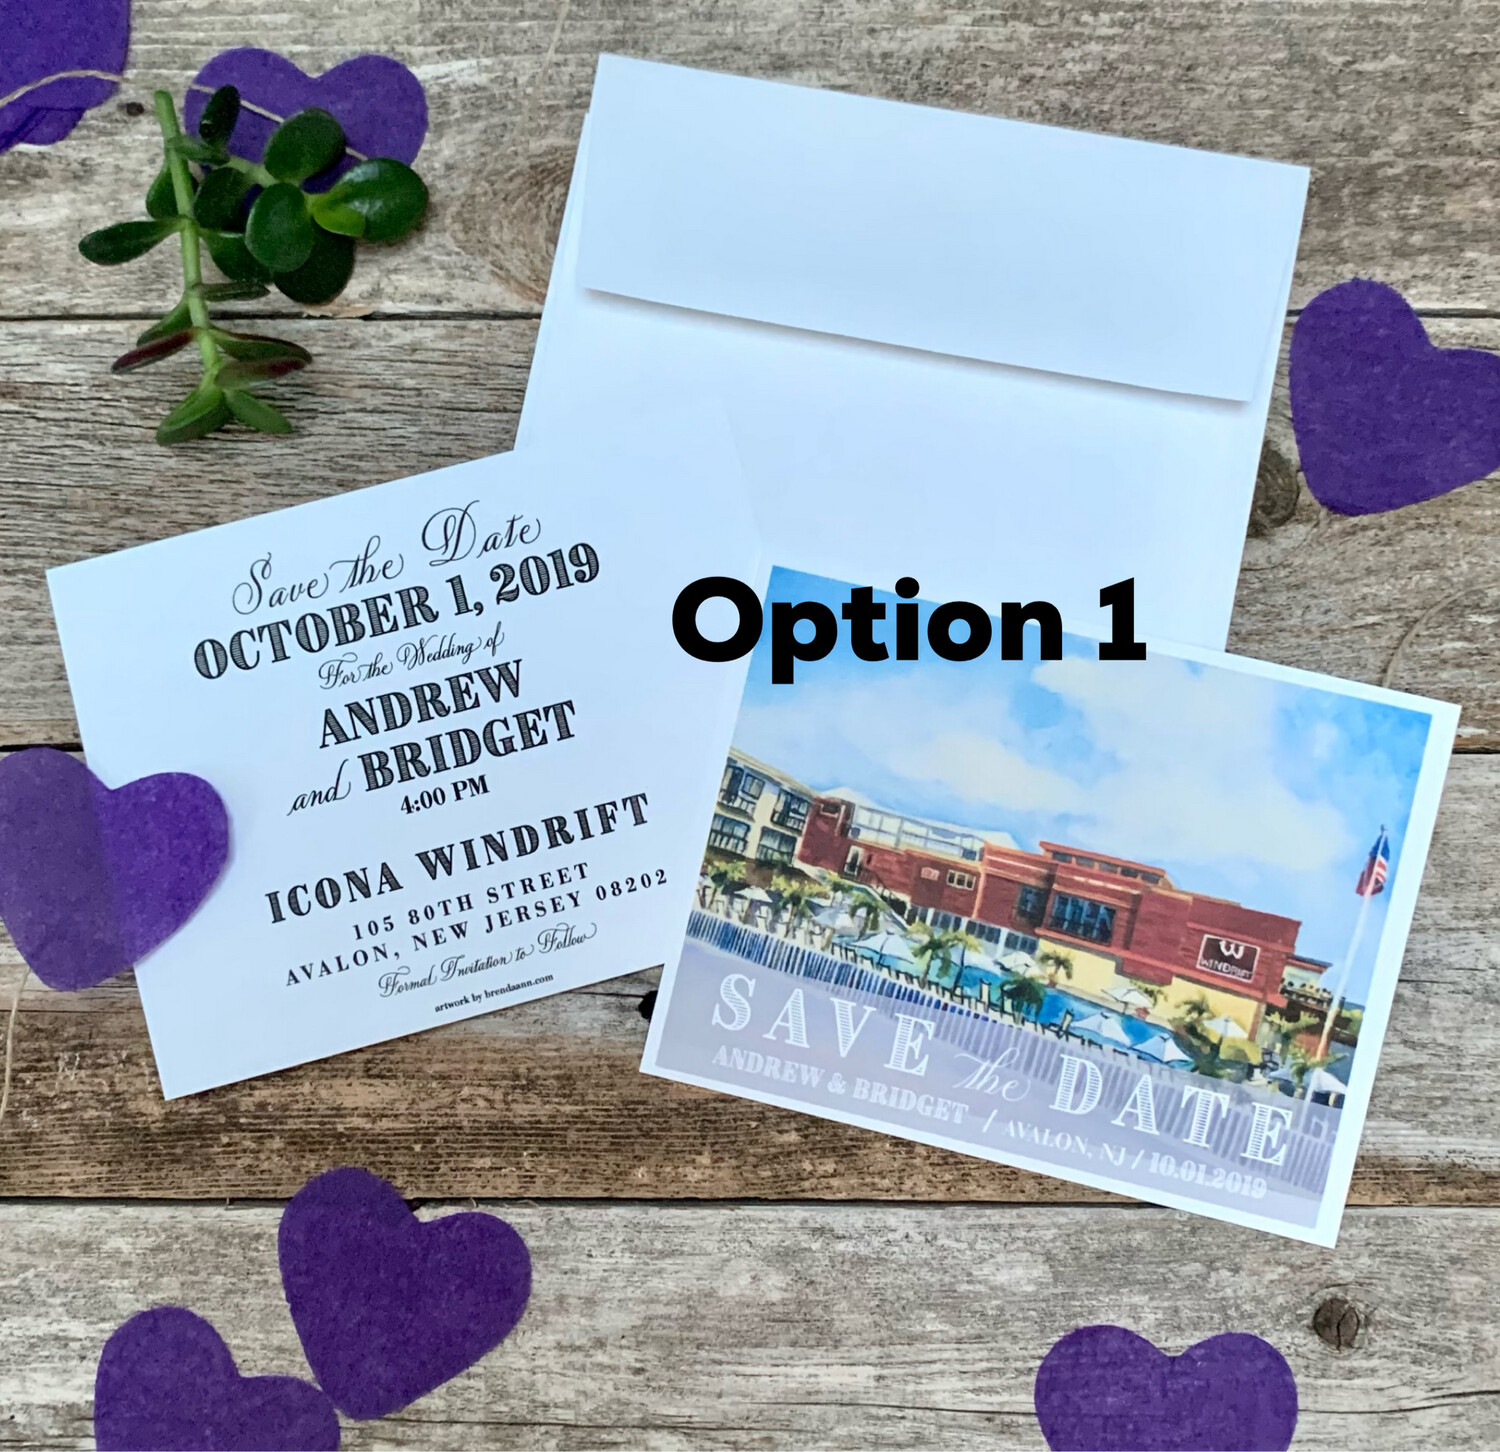 ICONA Windrift Resort Avalon NJ Watercolor Wedding Save the Date Cards